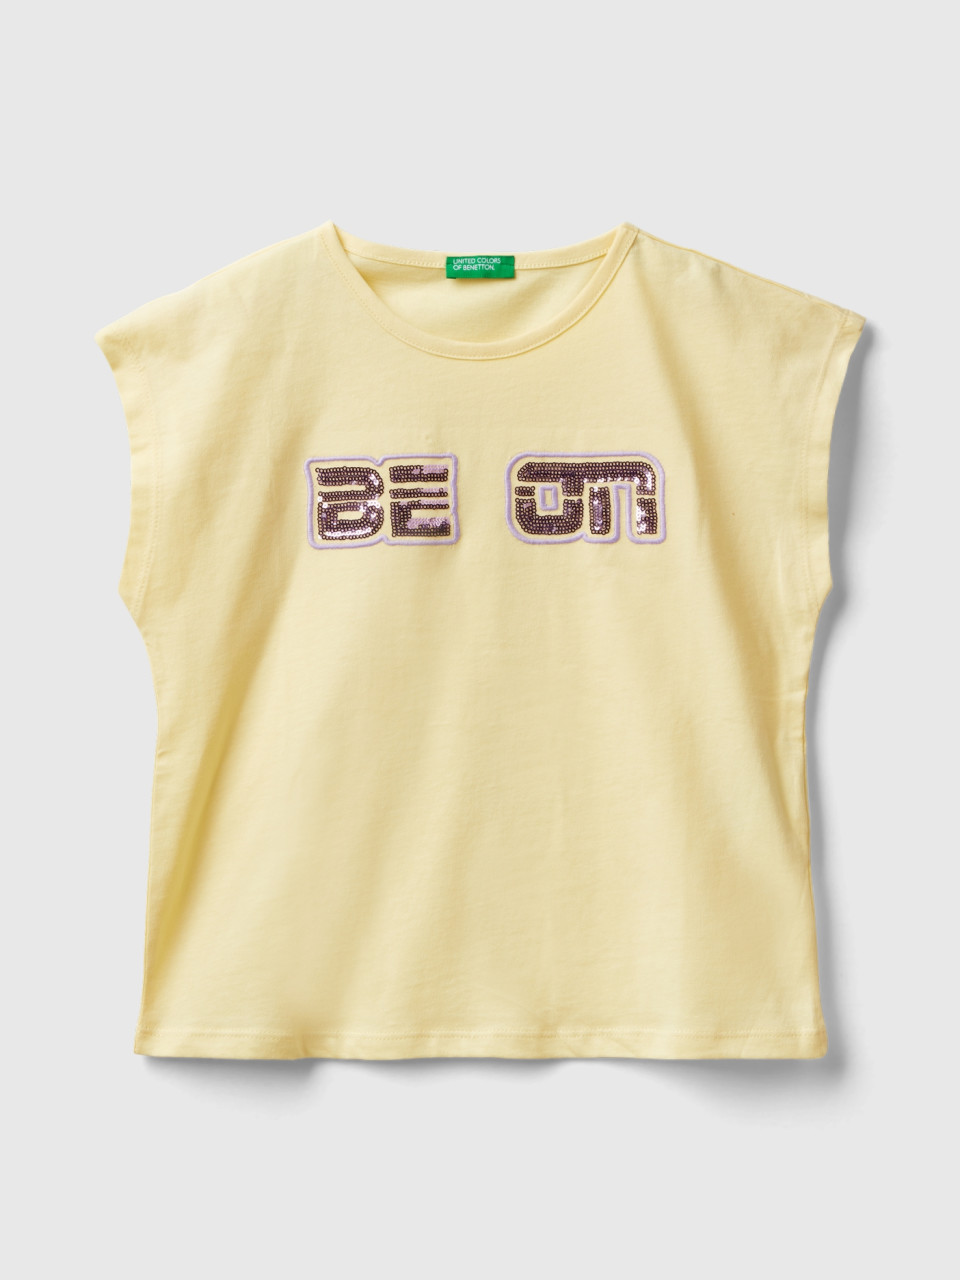 Benetton, Camiseta De Lentejuelas, Vainilla, Niños